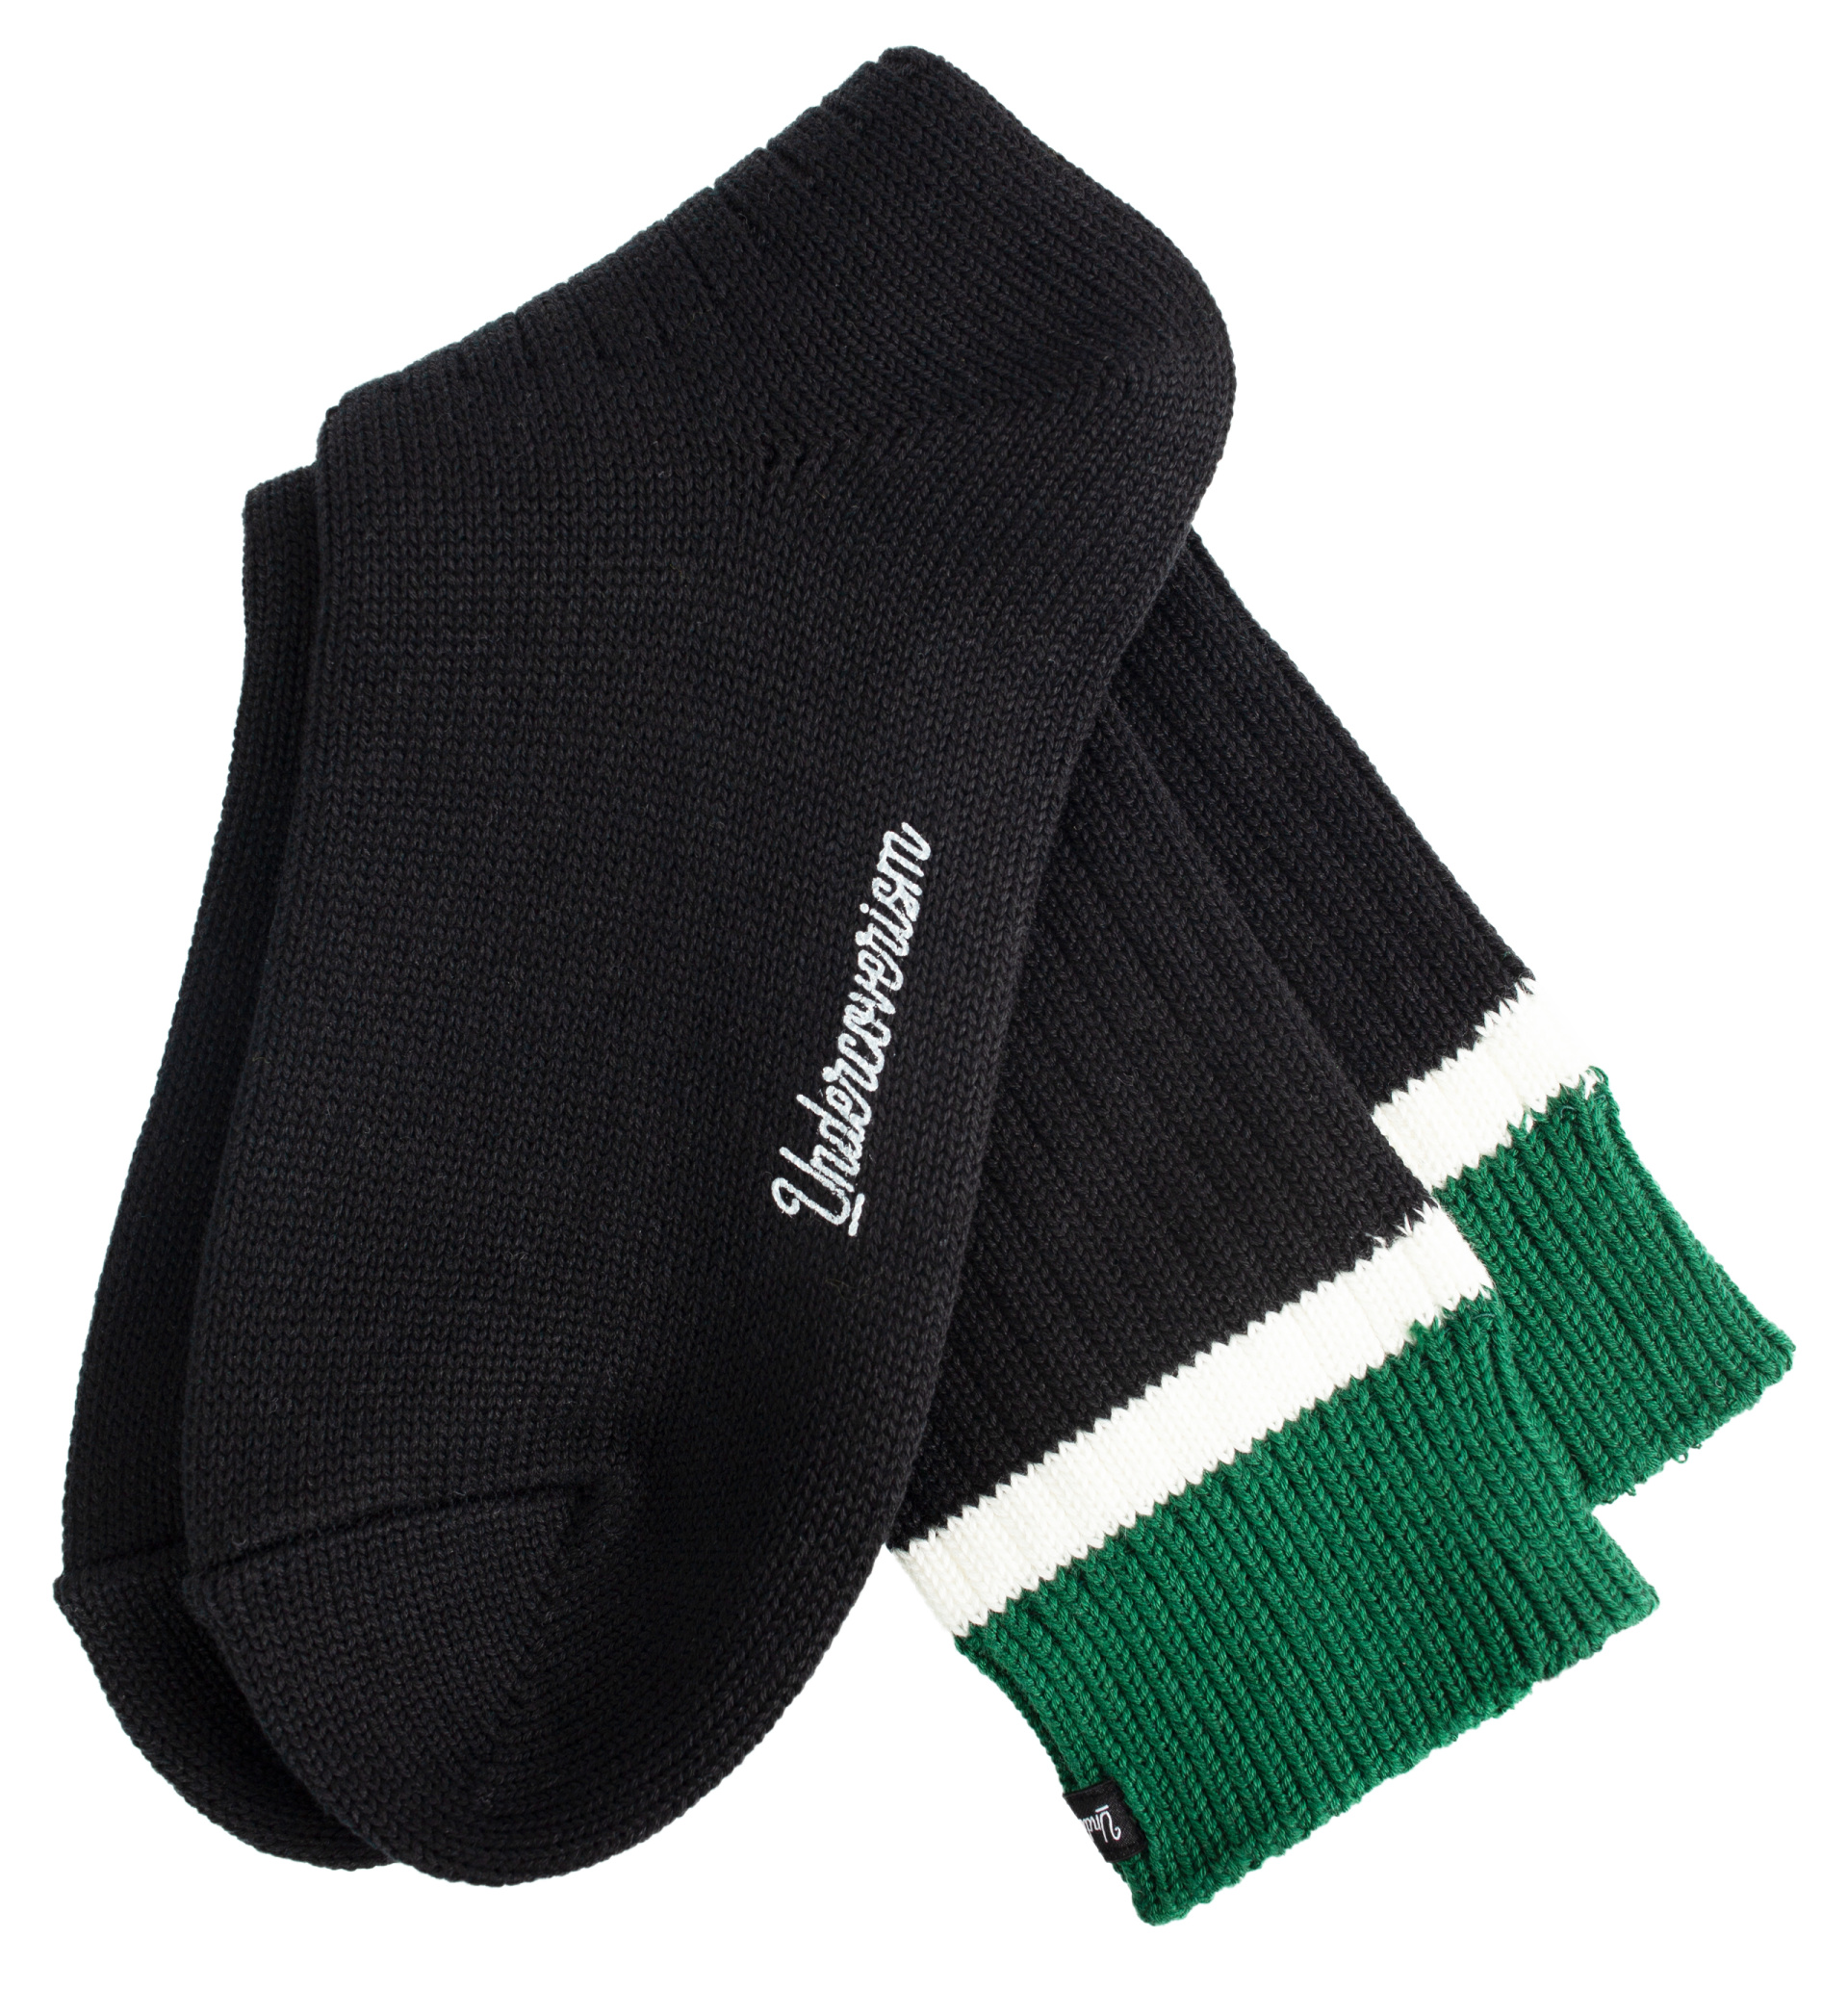 Undercover Black calf-high knit socks